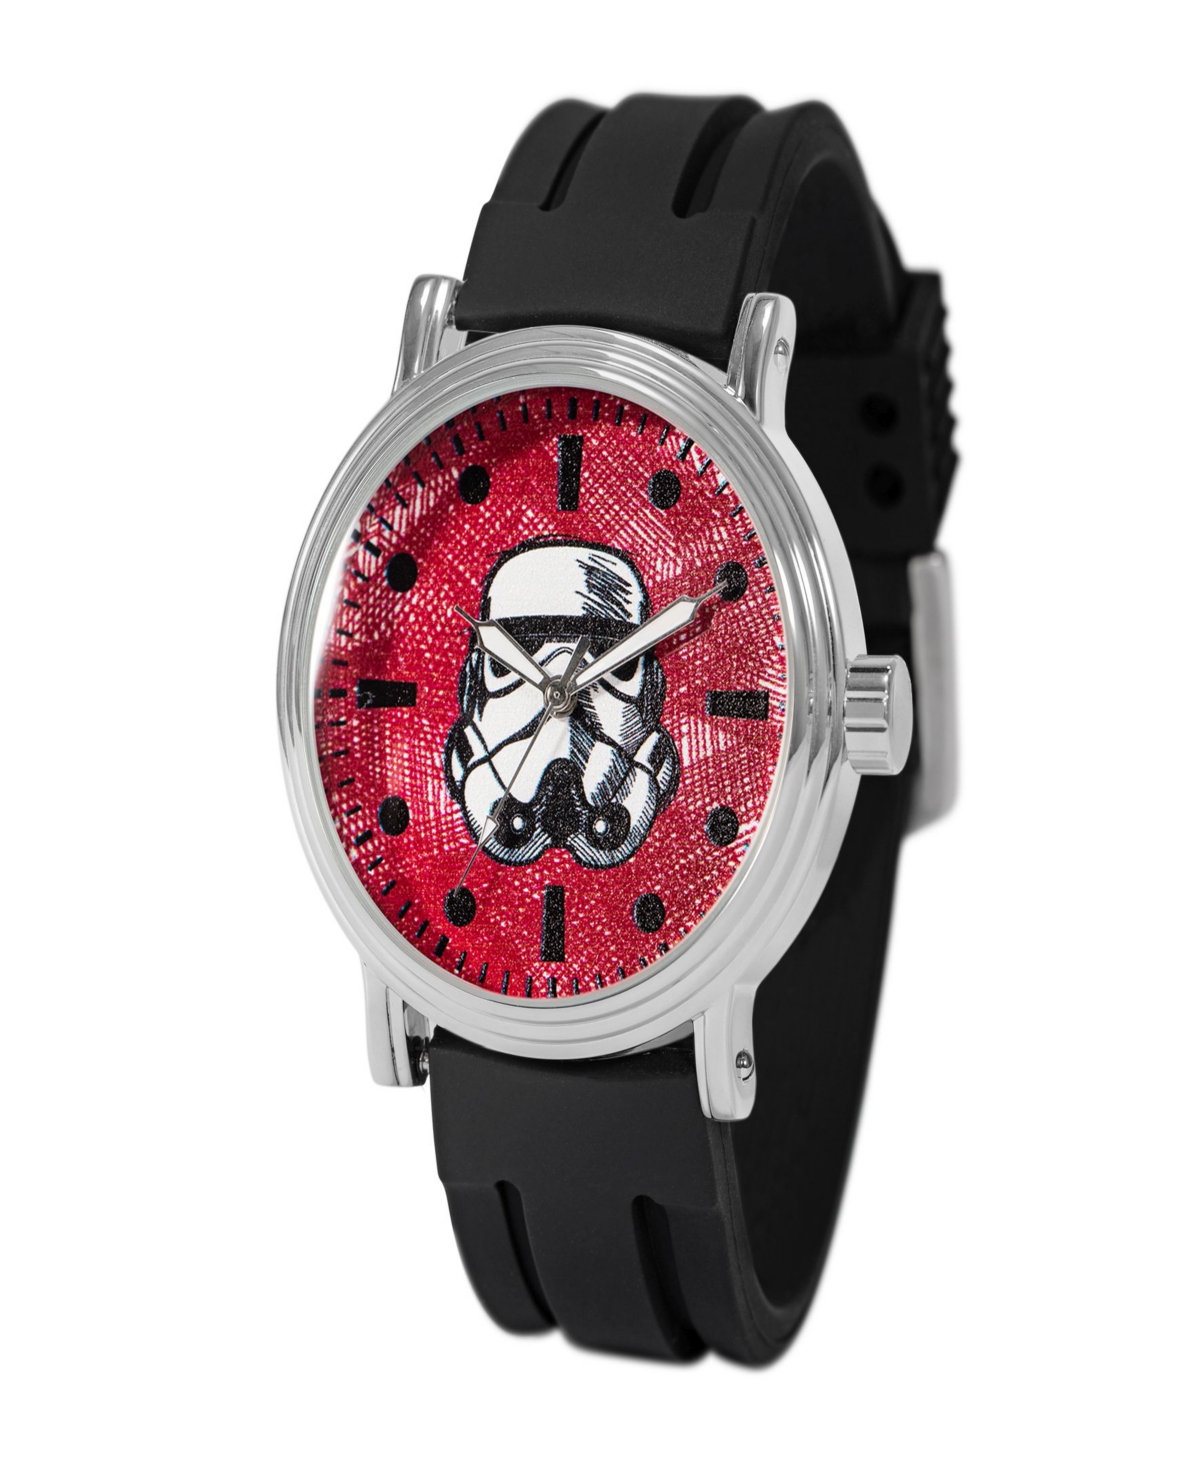 ewatchfactory Men's Disney Star Wars Alloy Black Rubber Strap Watch 44mm